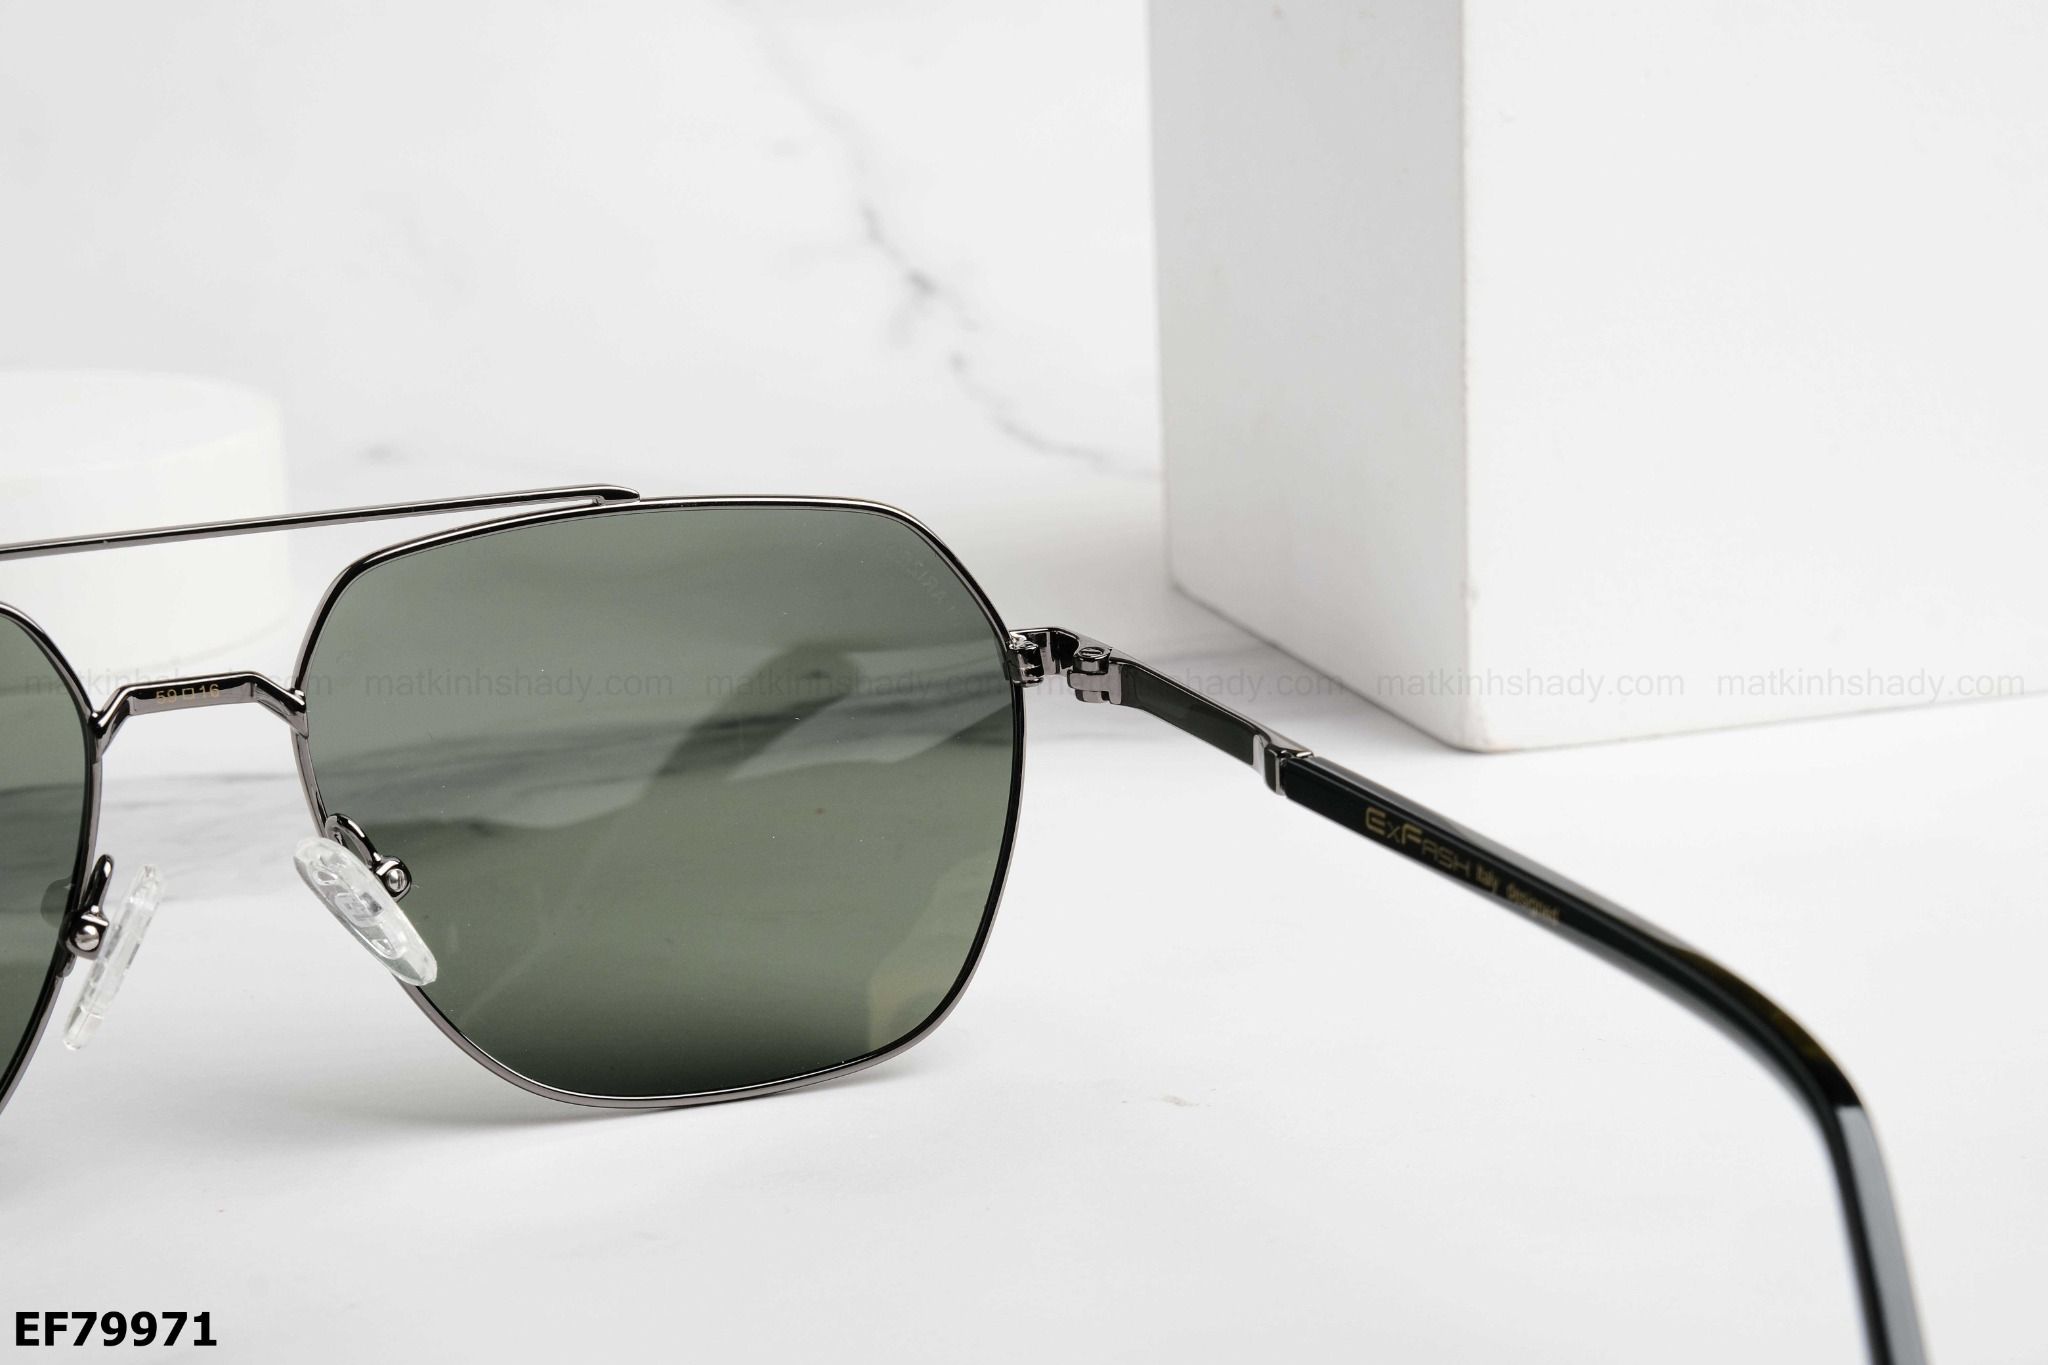  Exfash Eyewear - Sunglasses - EF79971 